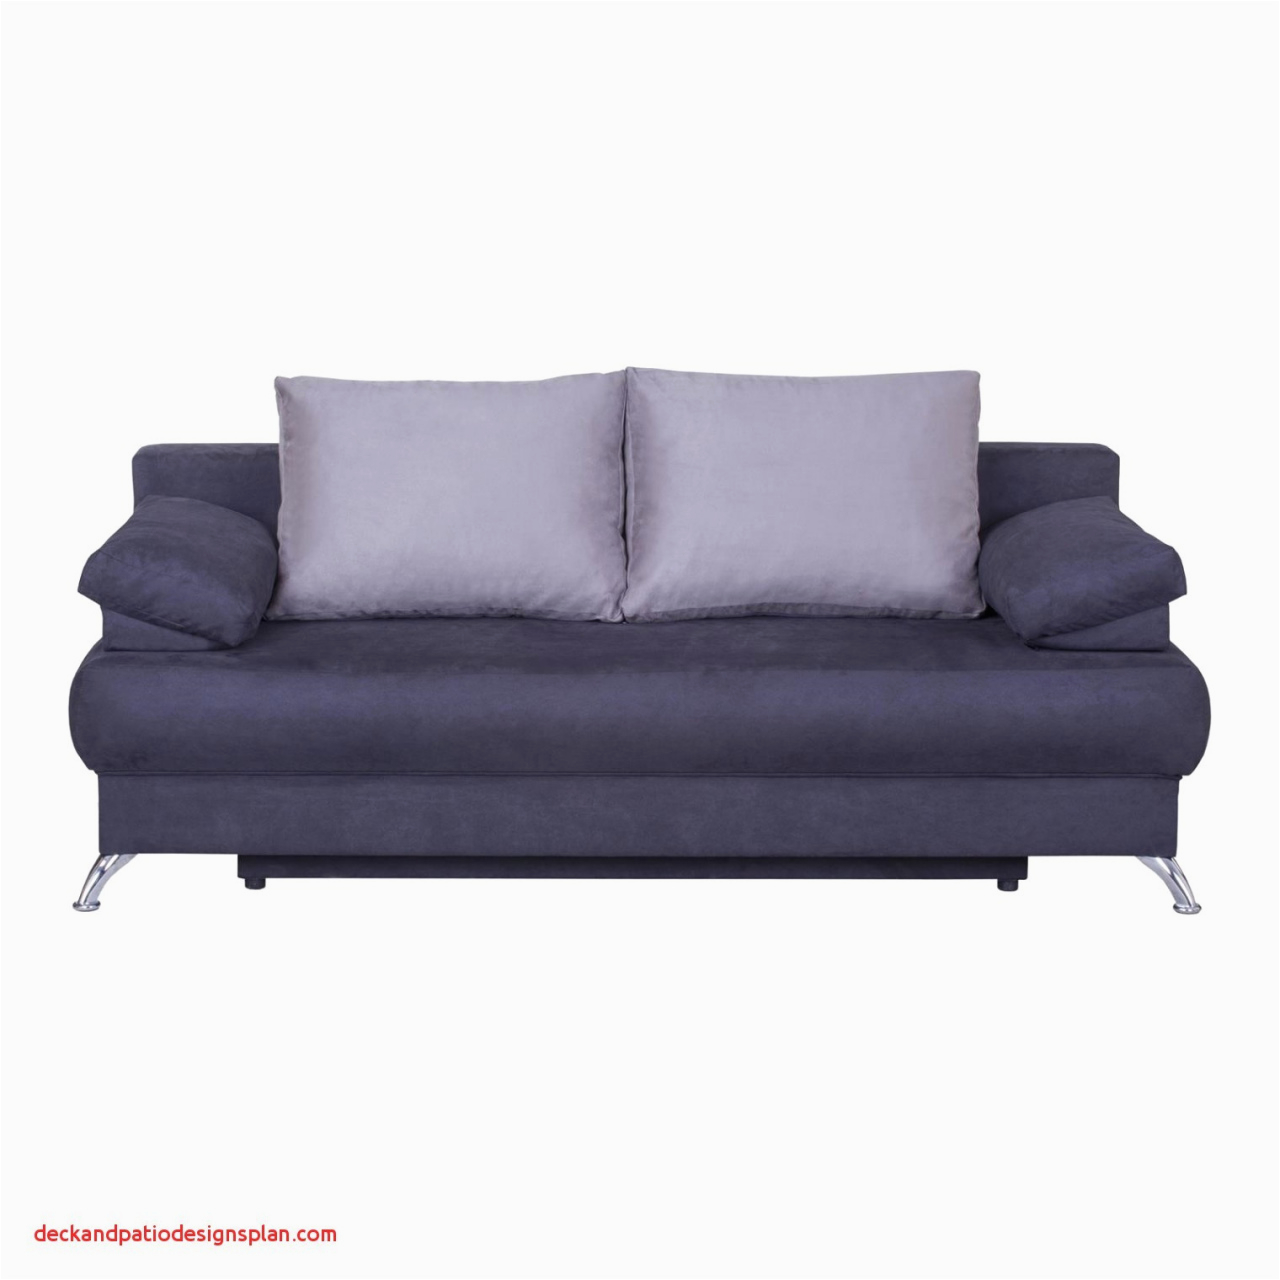 purple sofa bed 2er sofa leder zweisitzer schlafsofa frisch sofa zweisitzer 0d durch purple sofa bed